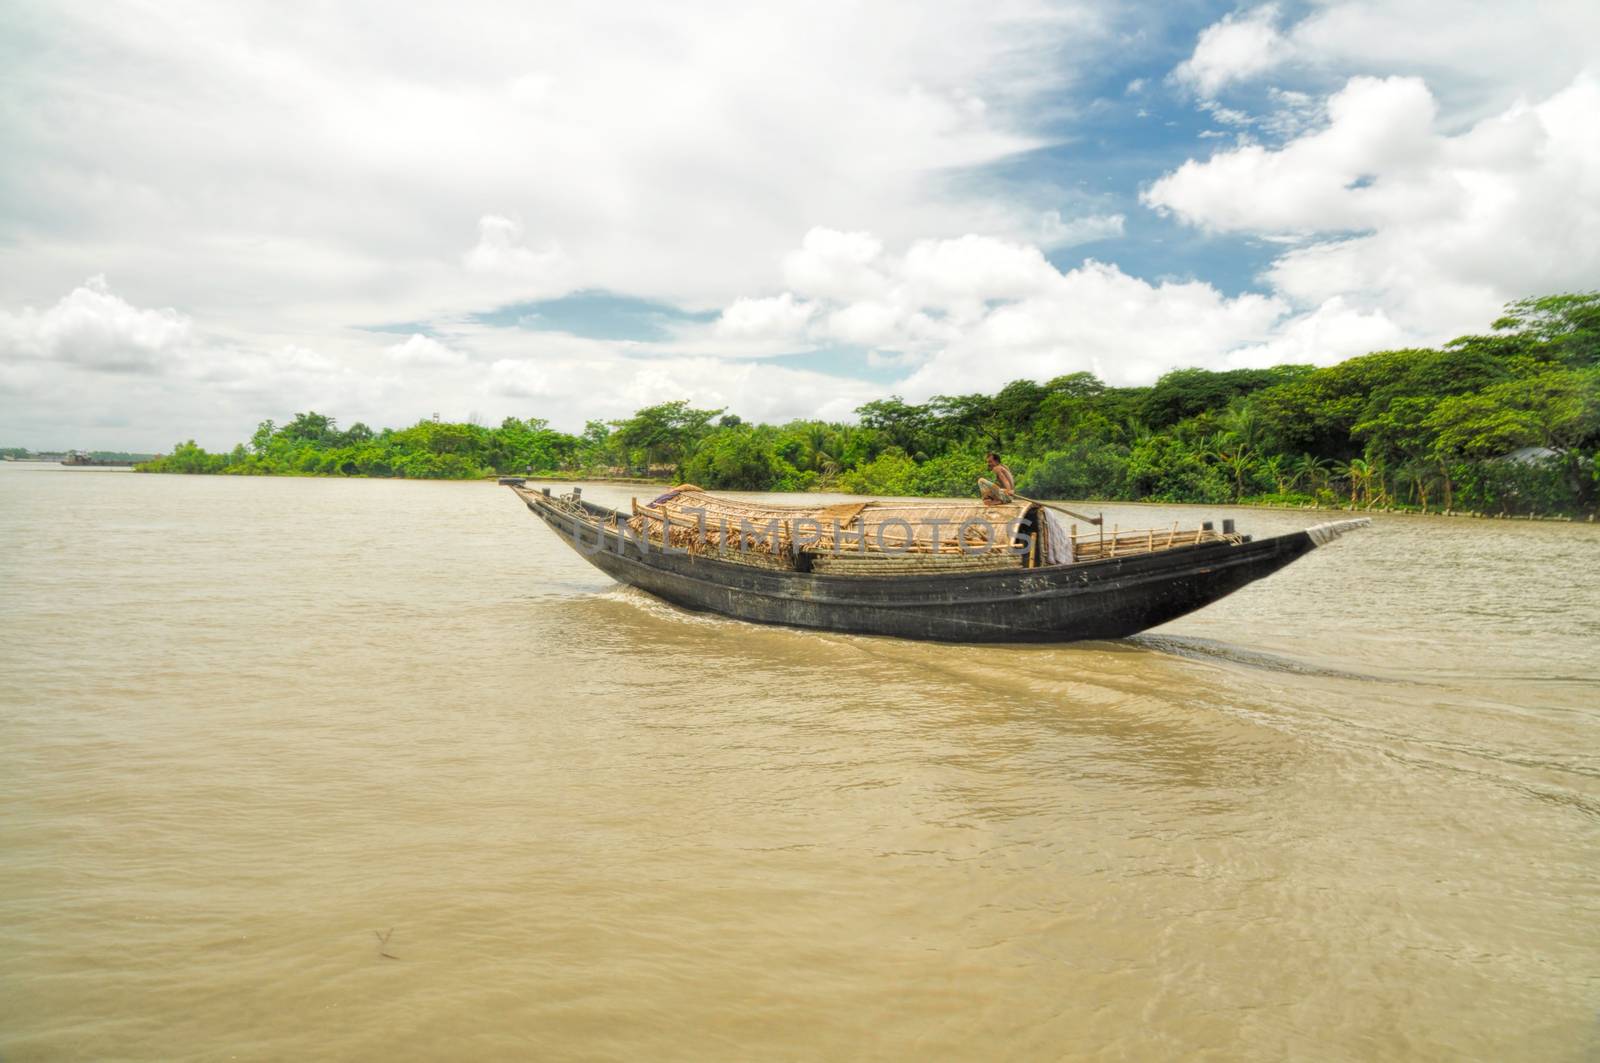 Boat in Bangladesh by MichalKnitl